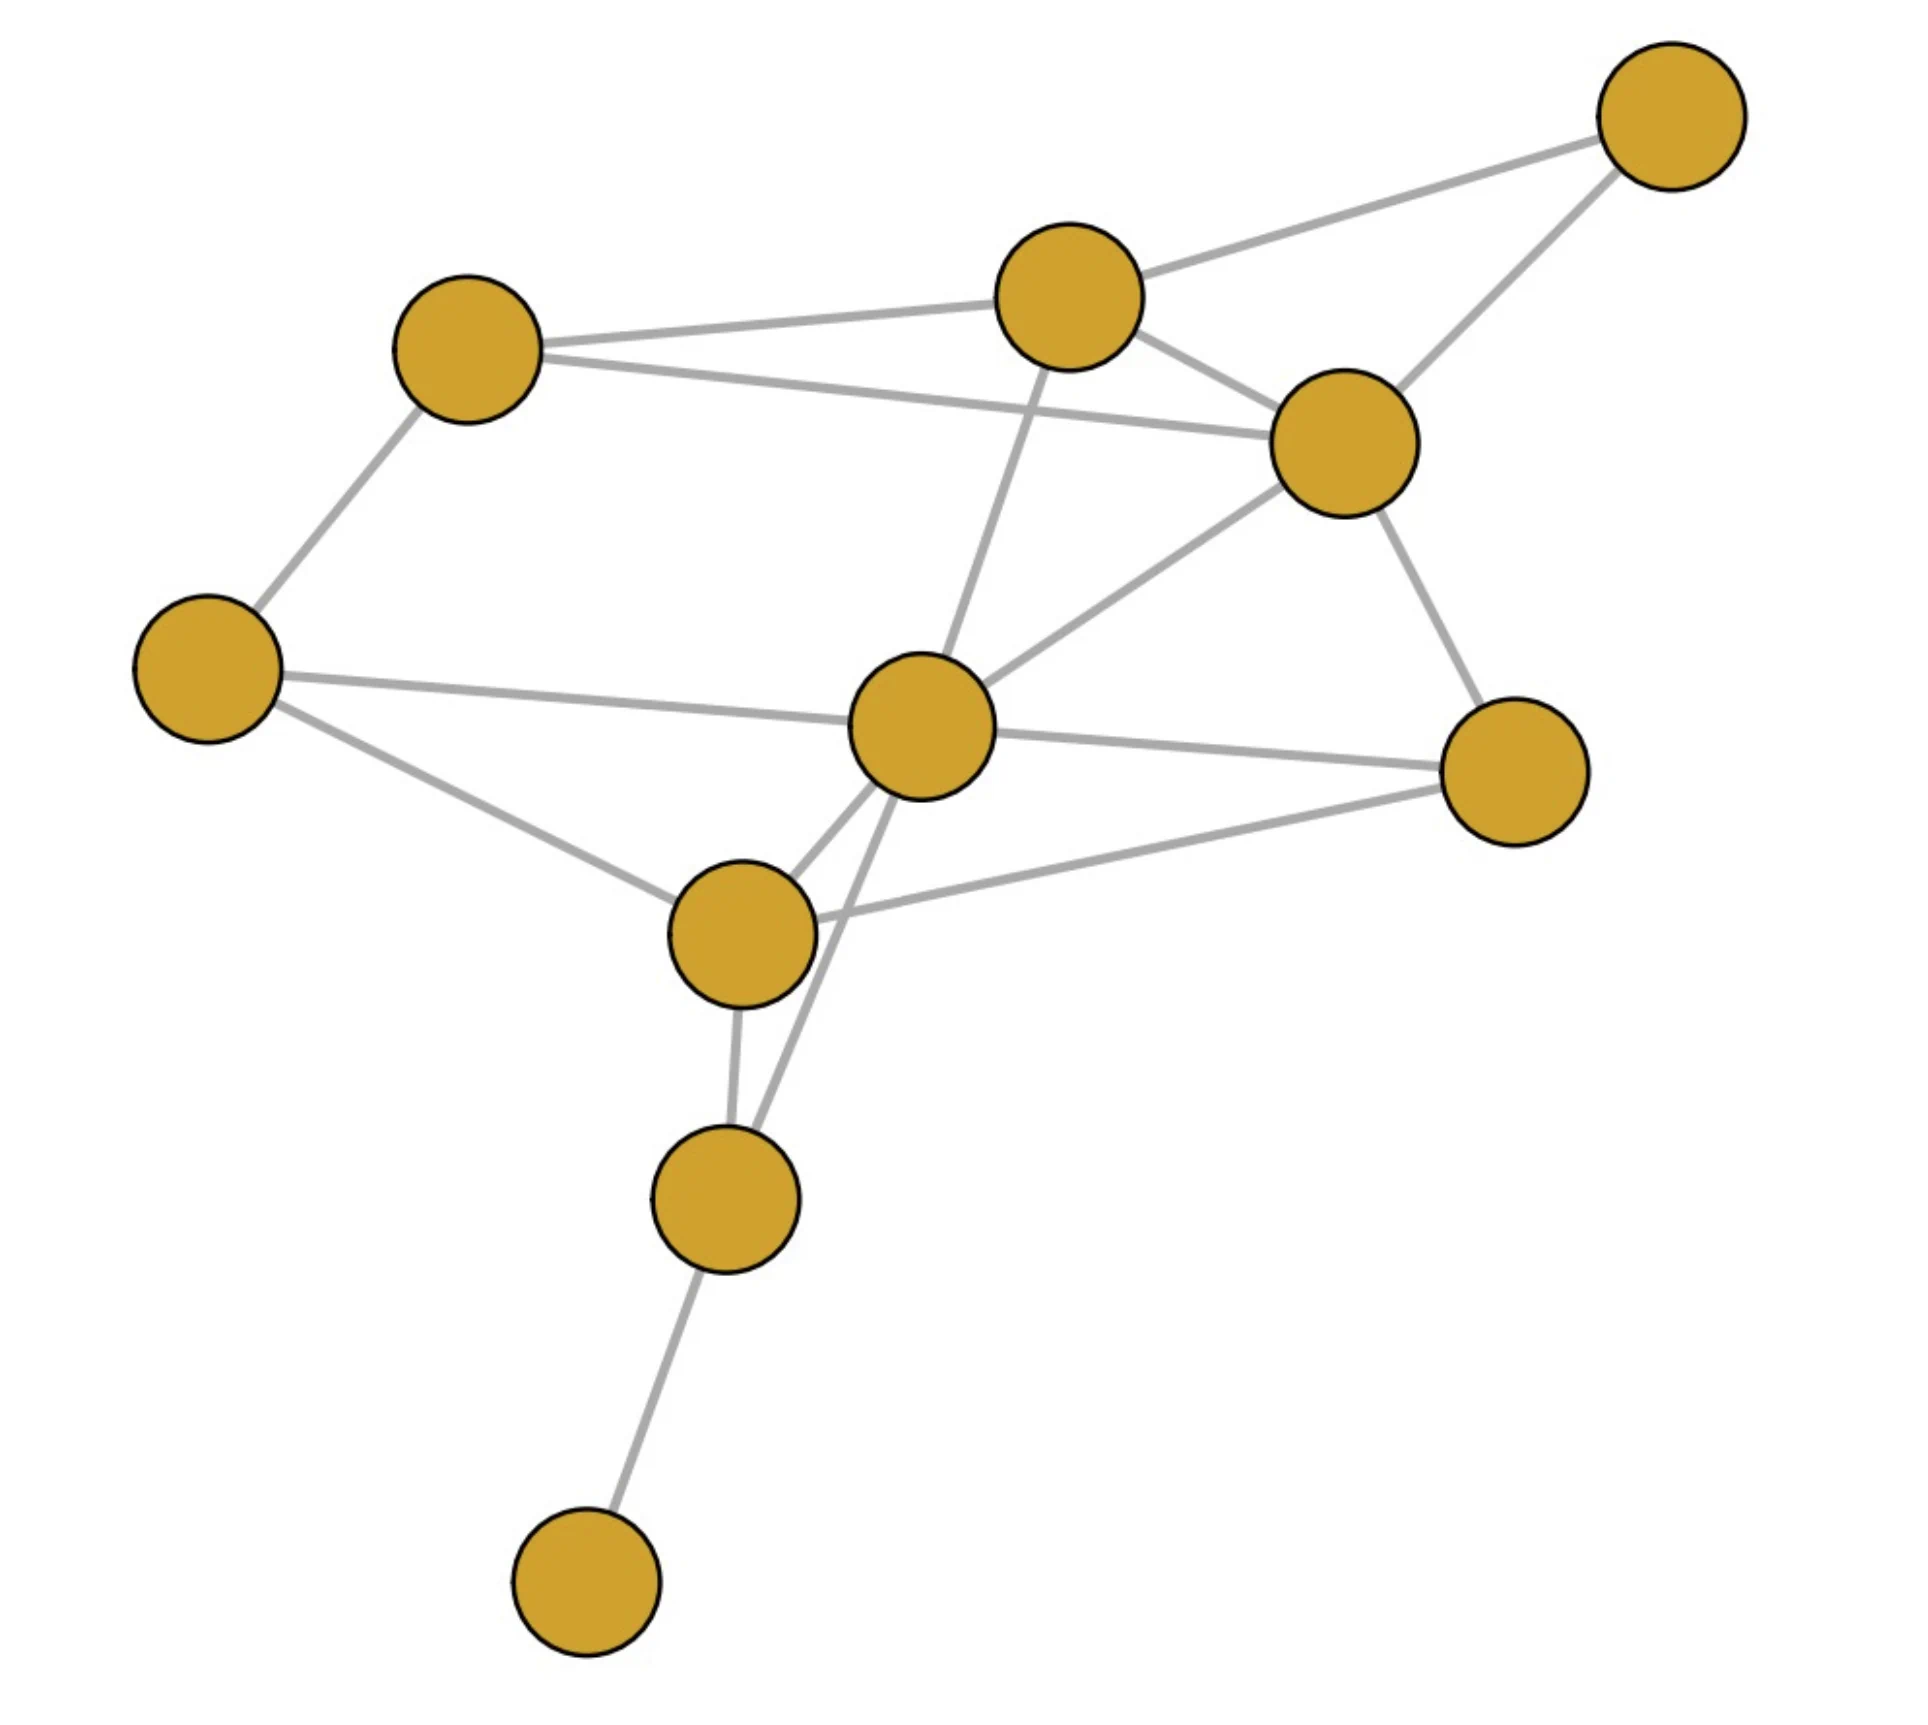 Ising model: maximum likelihood and
maximum pseudolikelihood estimators, random graph